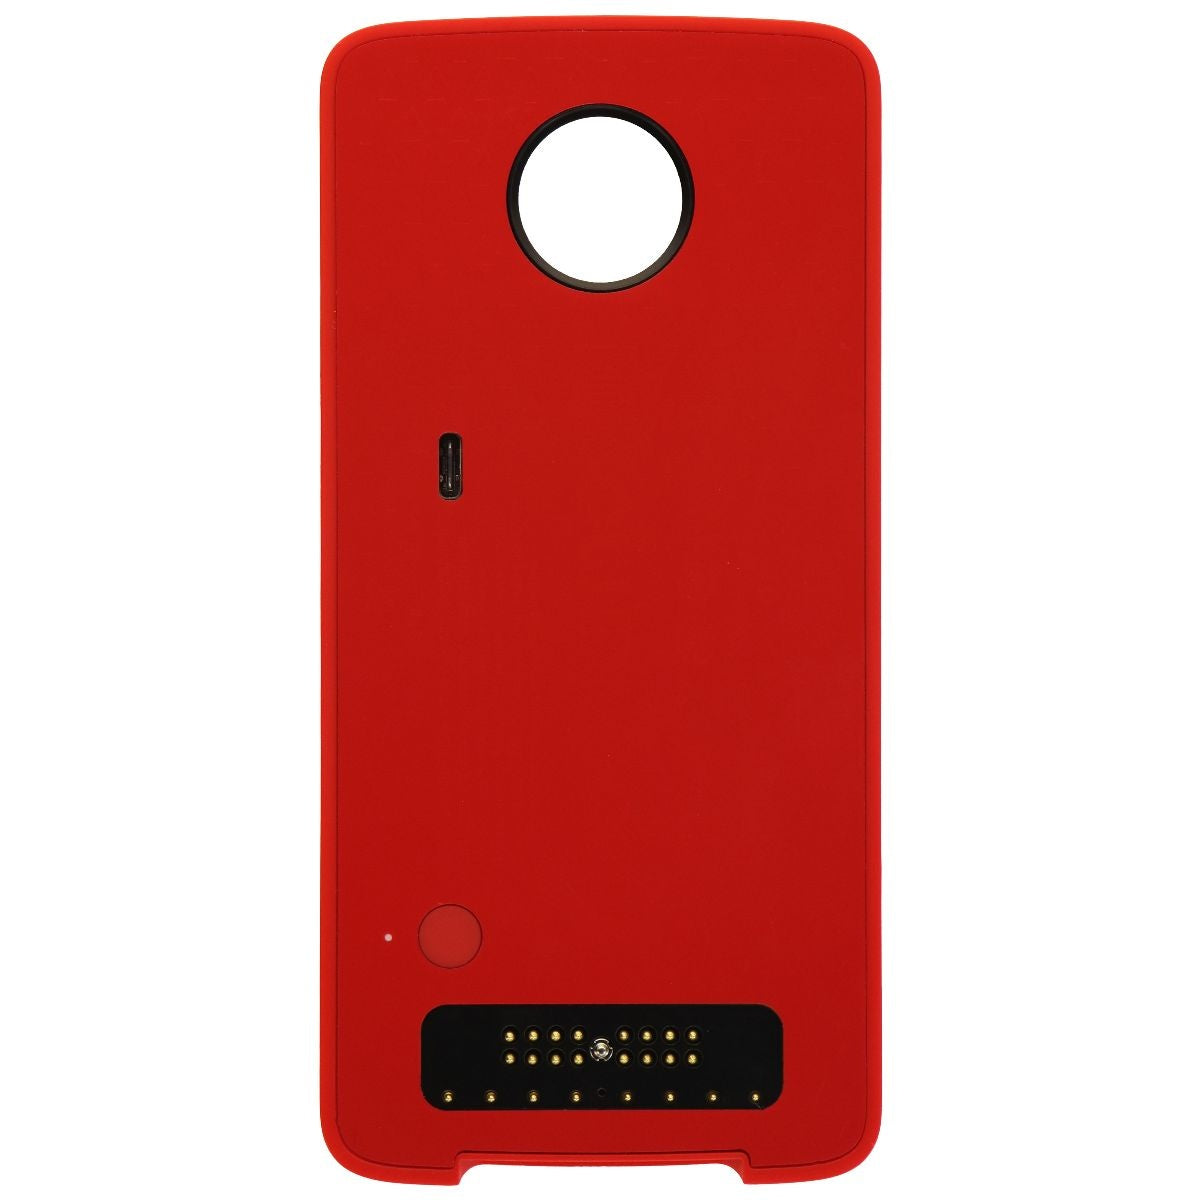 JBL MotoMod Soundboost 2 Audio Speaker Mod for Motorola Moto Z Phones - Red Cell Phone - Audio Docks & Speakers JBL    - Simple Cell Bulk Wholesale Pricing - USA Seller